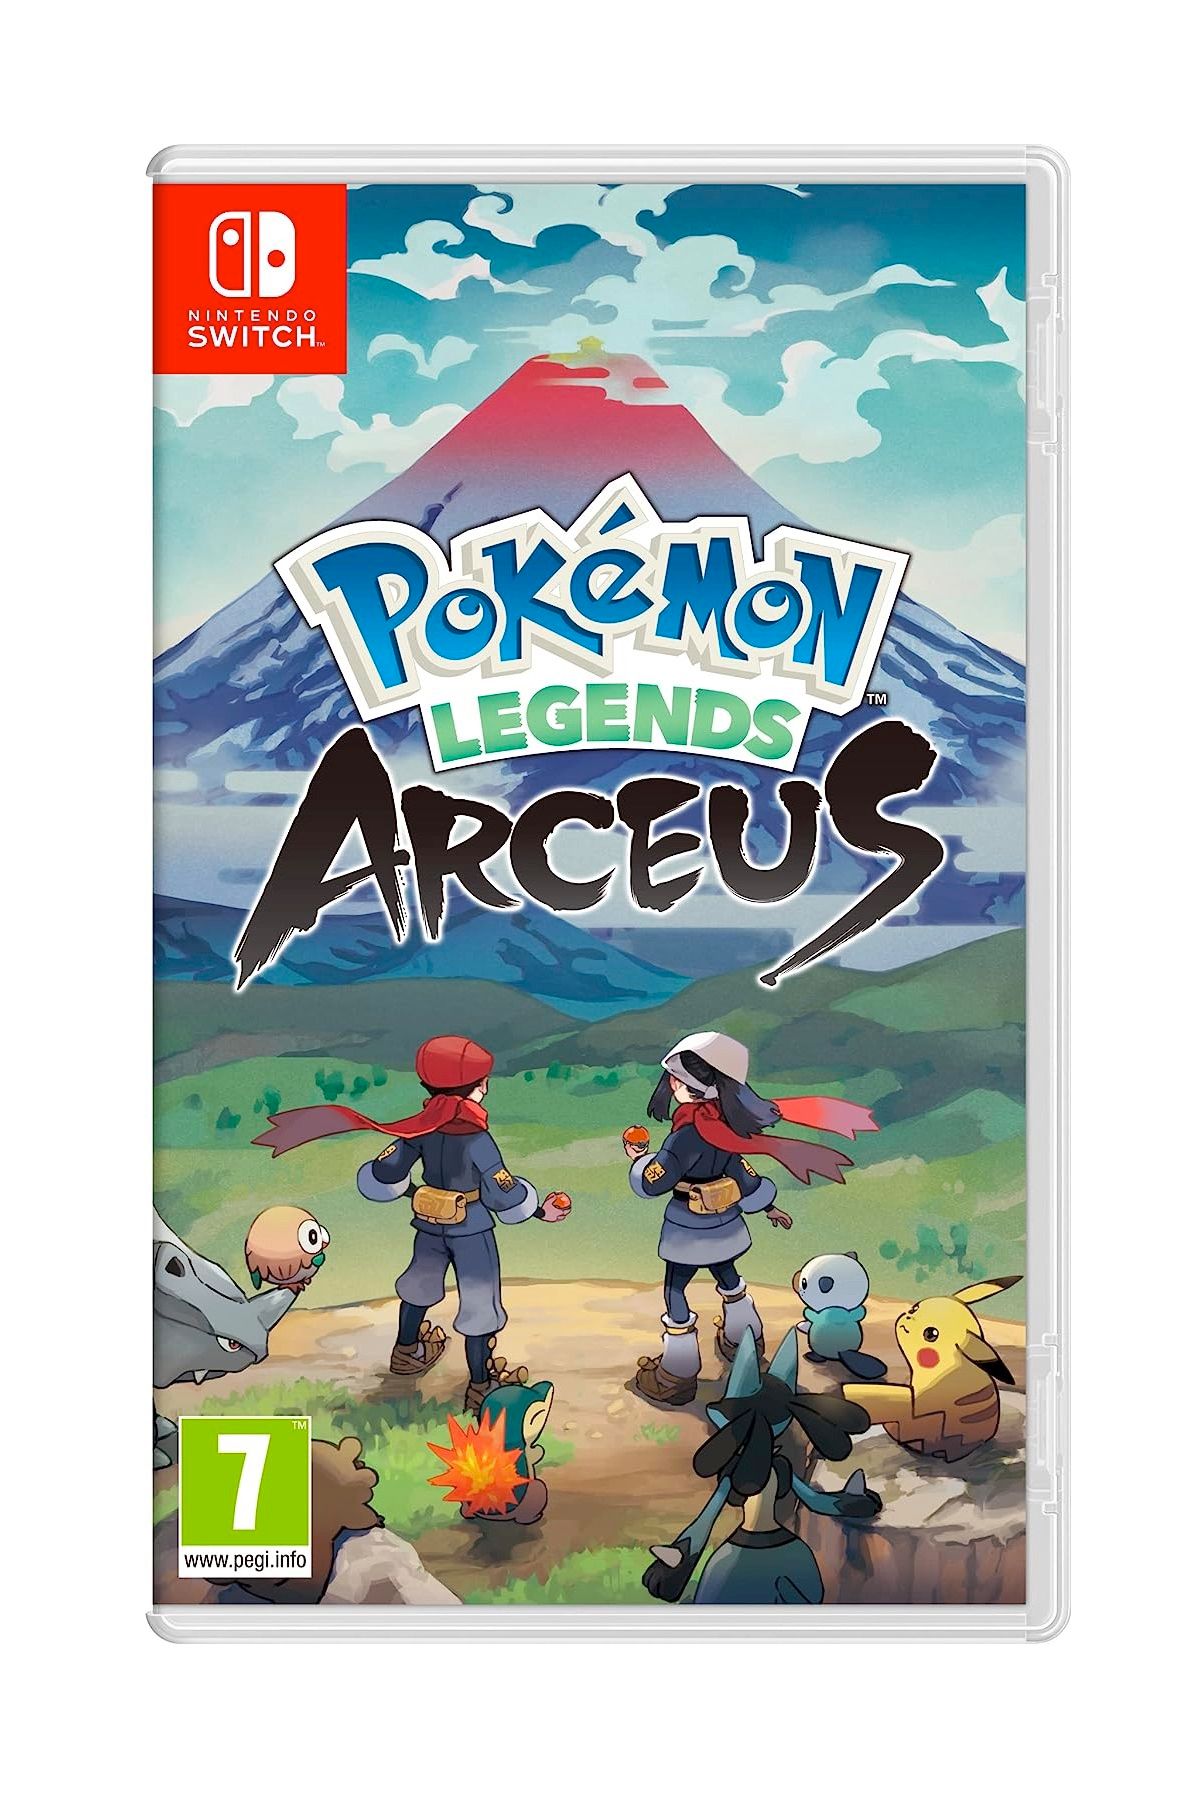 Which Legends: Arceus Pokémon Are Shiny Locked